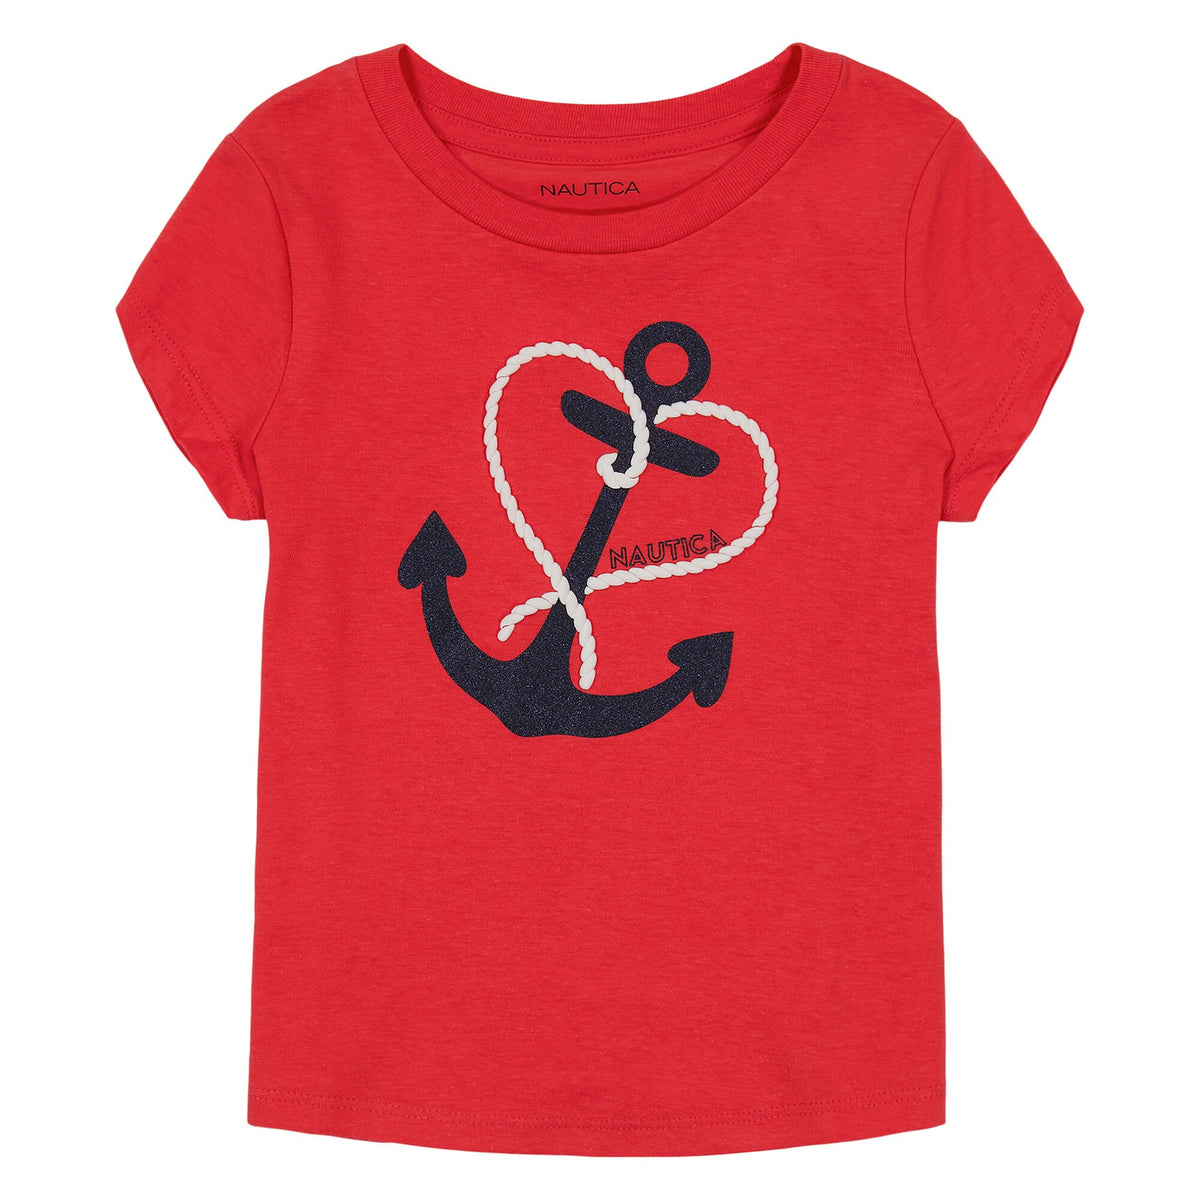 Nautica Toddler Girls' Glitter Anchor T-Shirt (2T-4T) Buoy Red